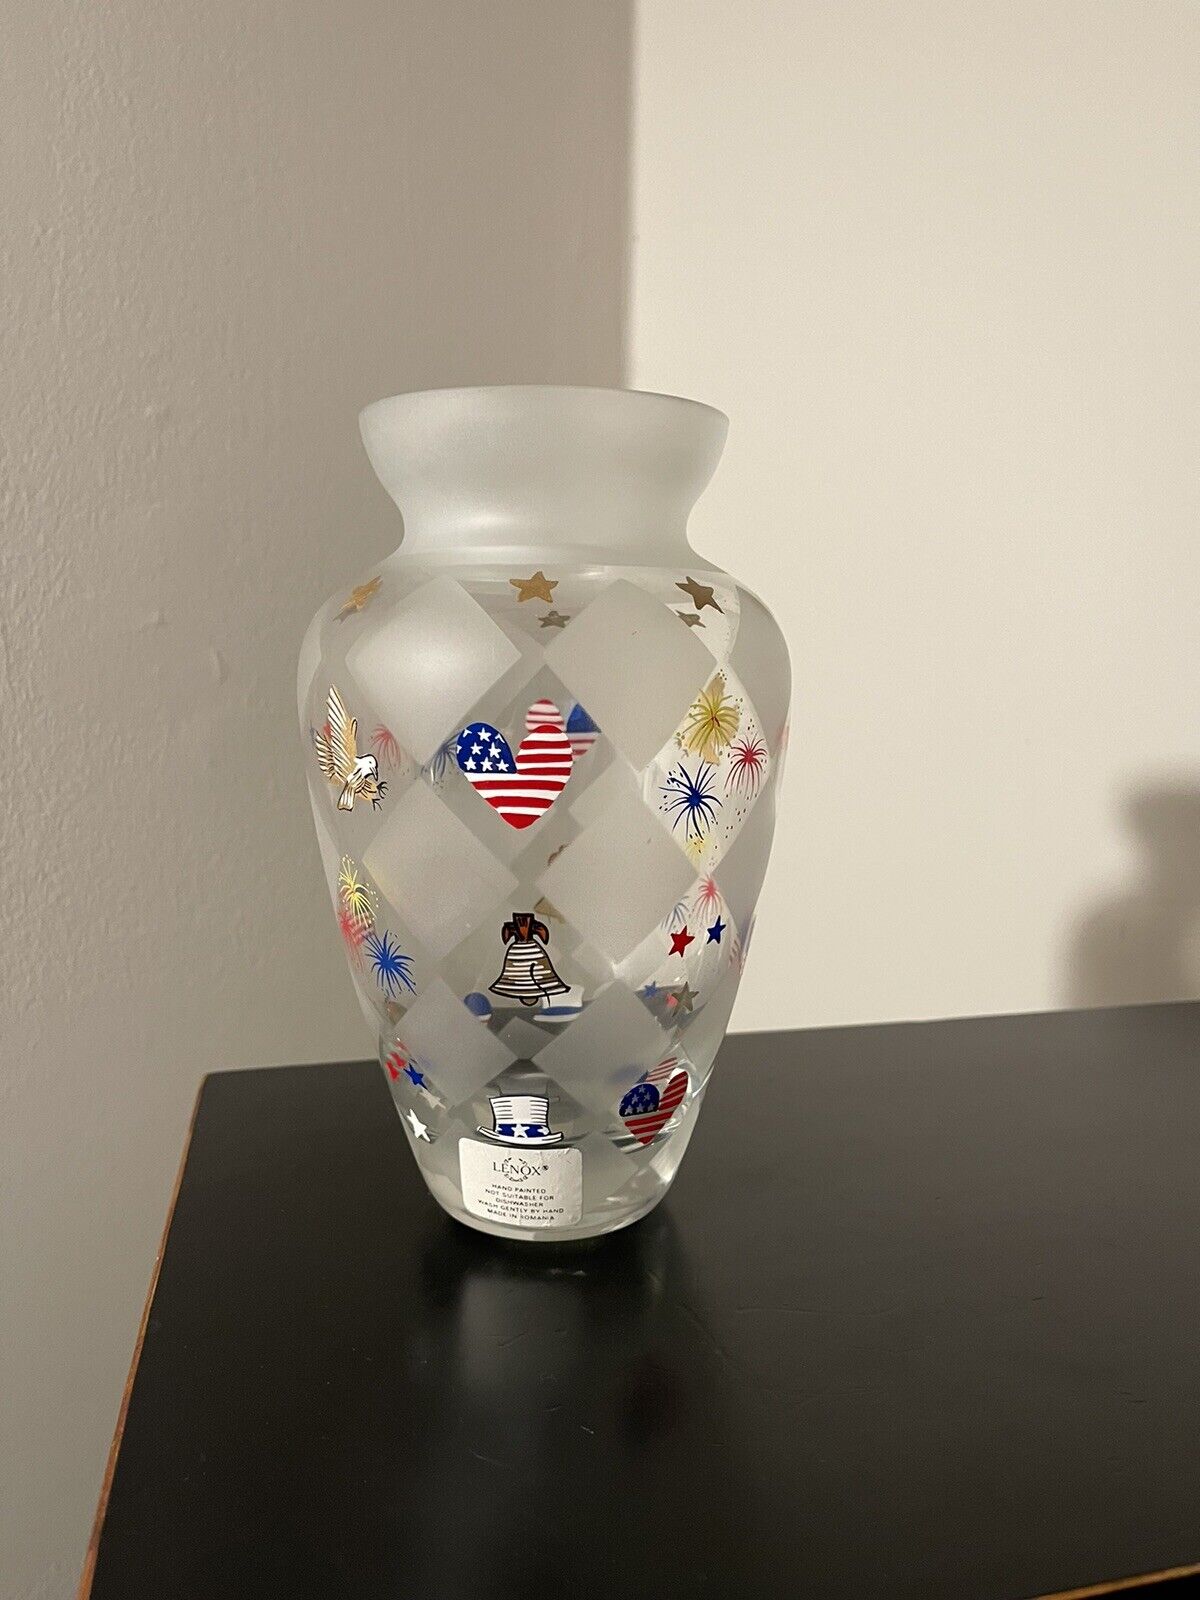 Lenox Patriotic Hand Painted Vase - 8 1/2 in High - EUC